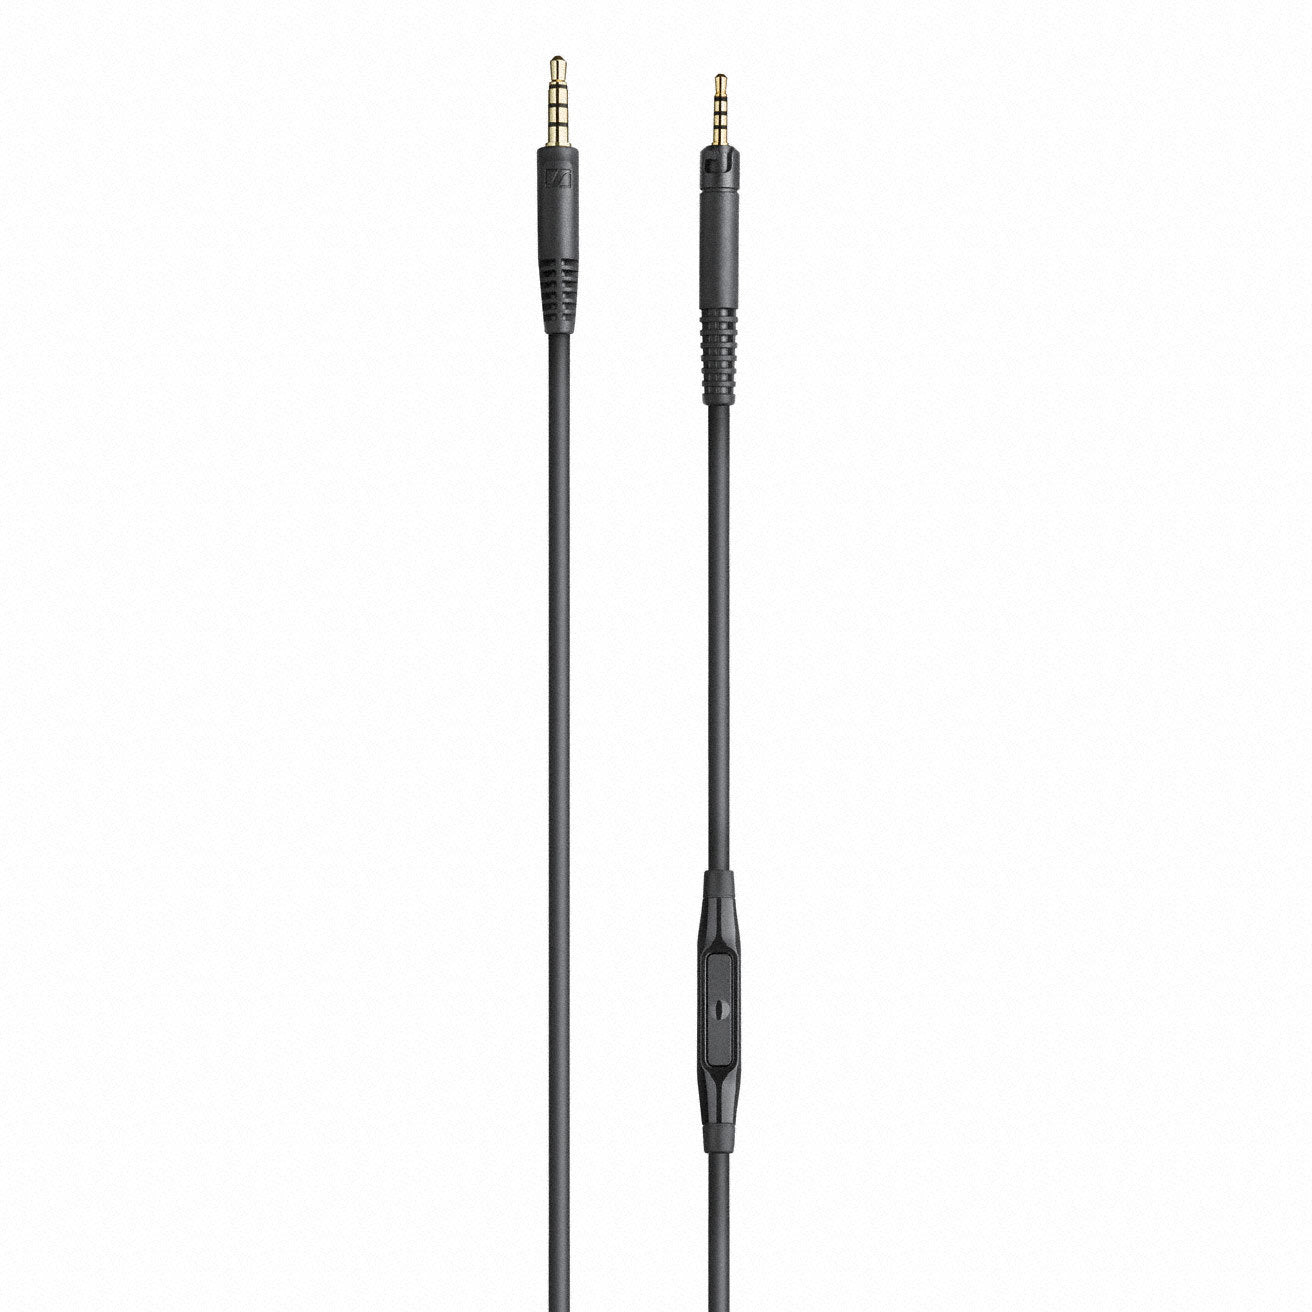 Sennheiser HD 569 Around Ear Headphones With Inline Mic - Black